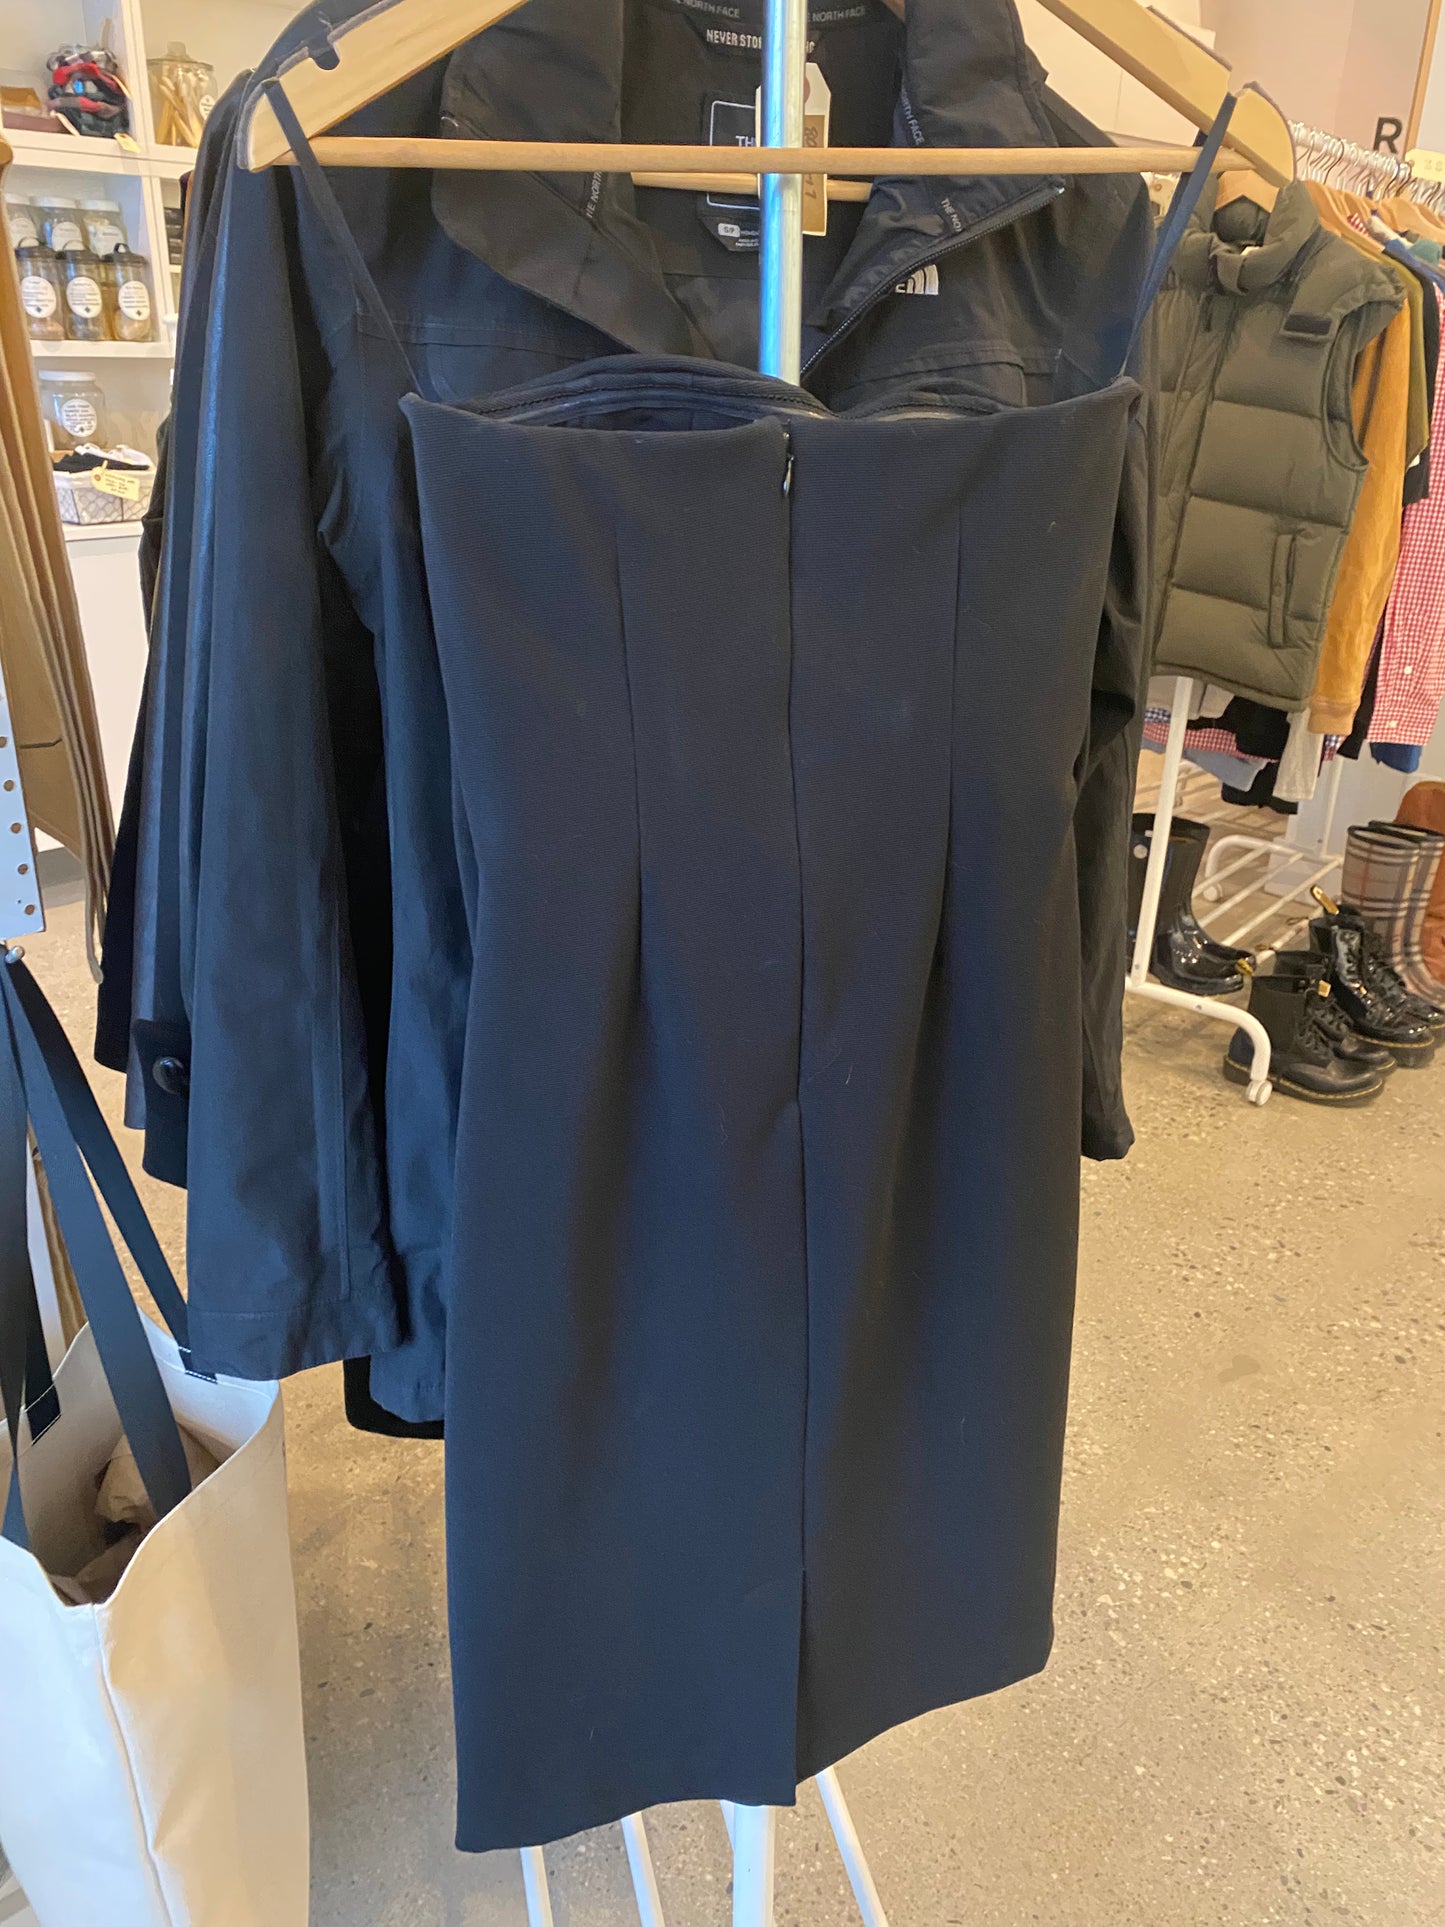 Consignment - 6507-2 Banana Republic strapless black dress sz 0